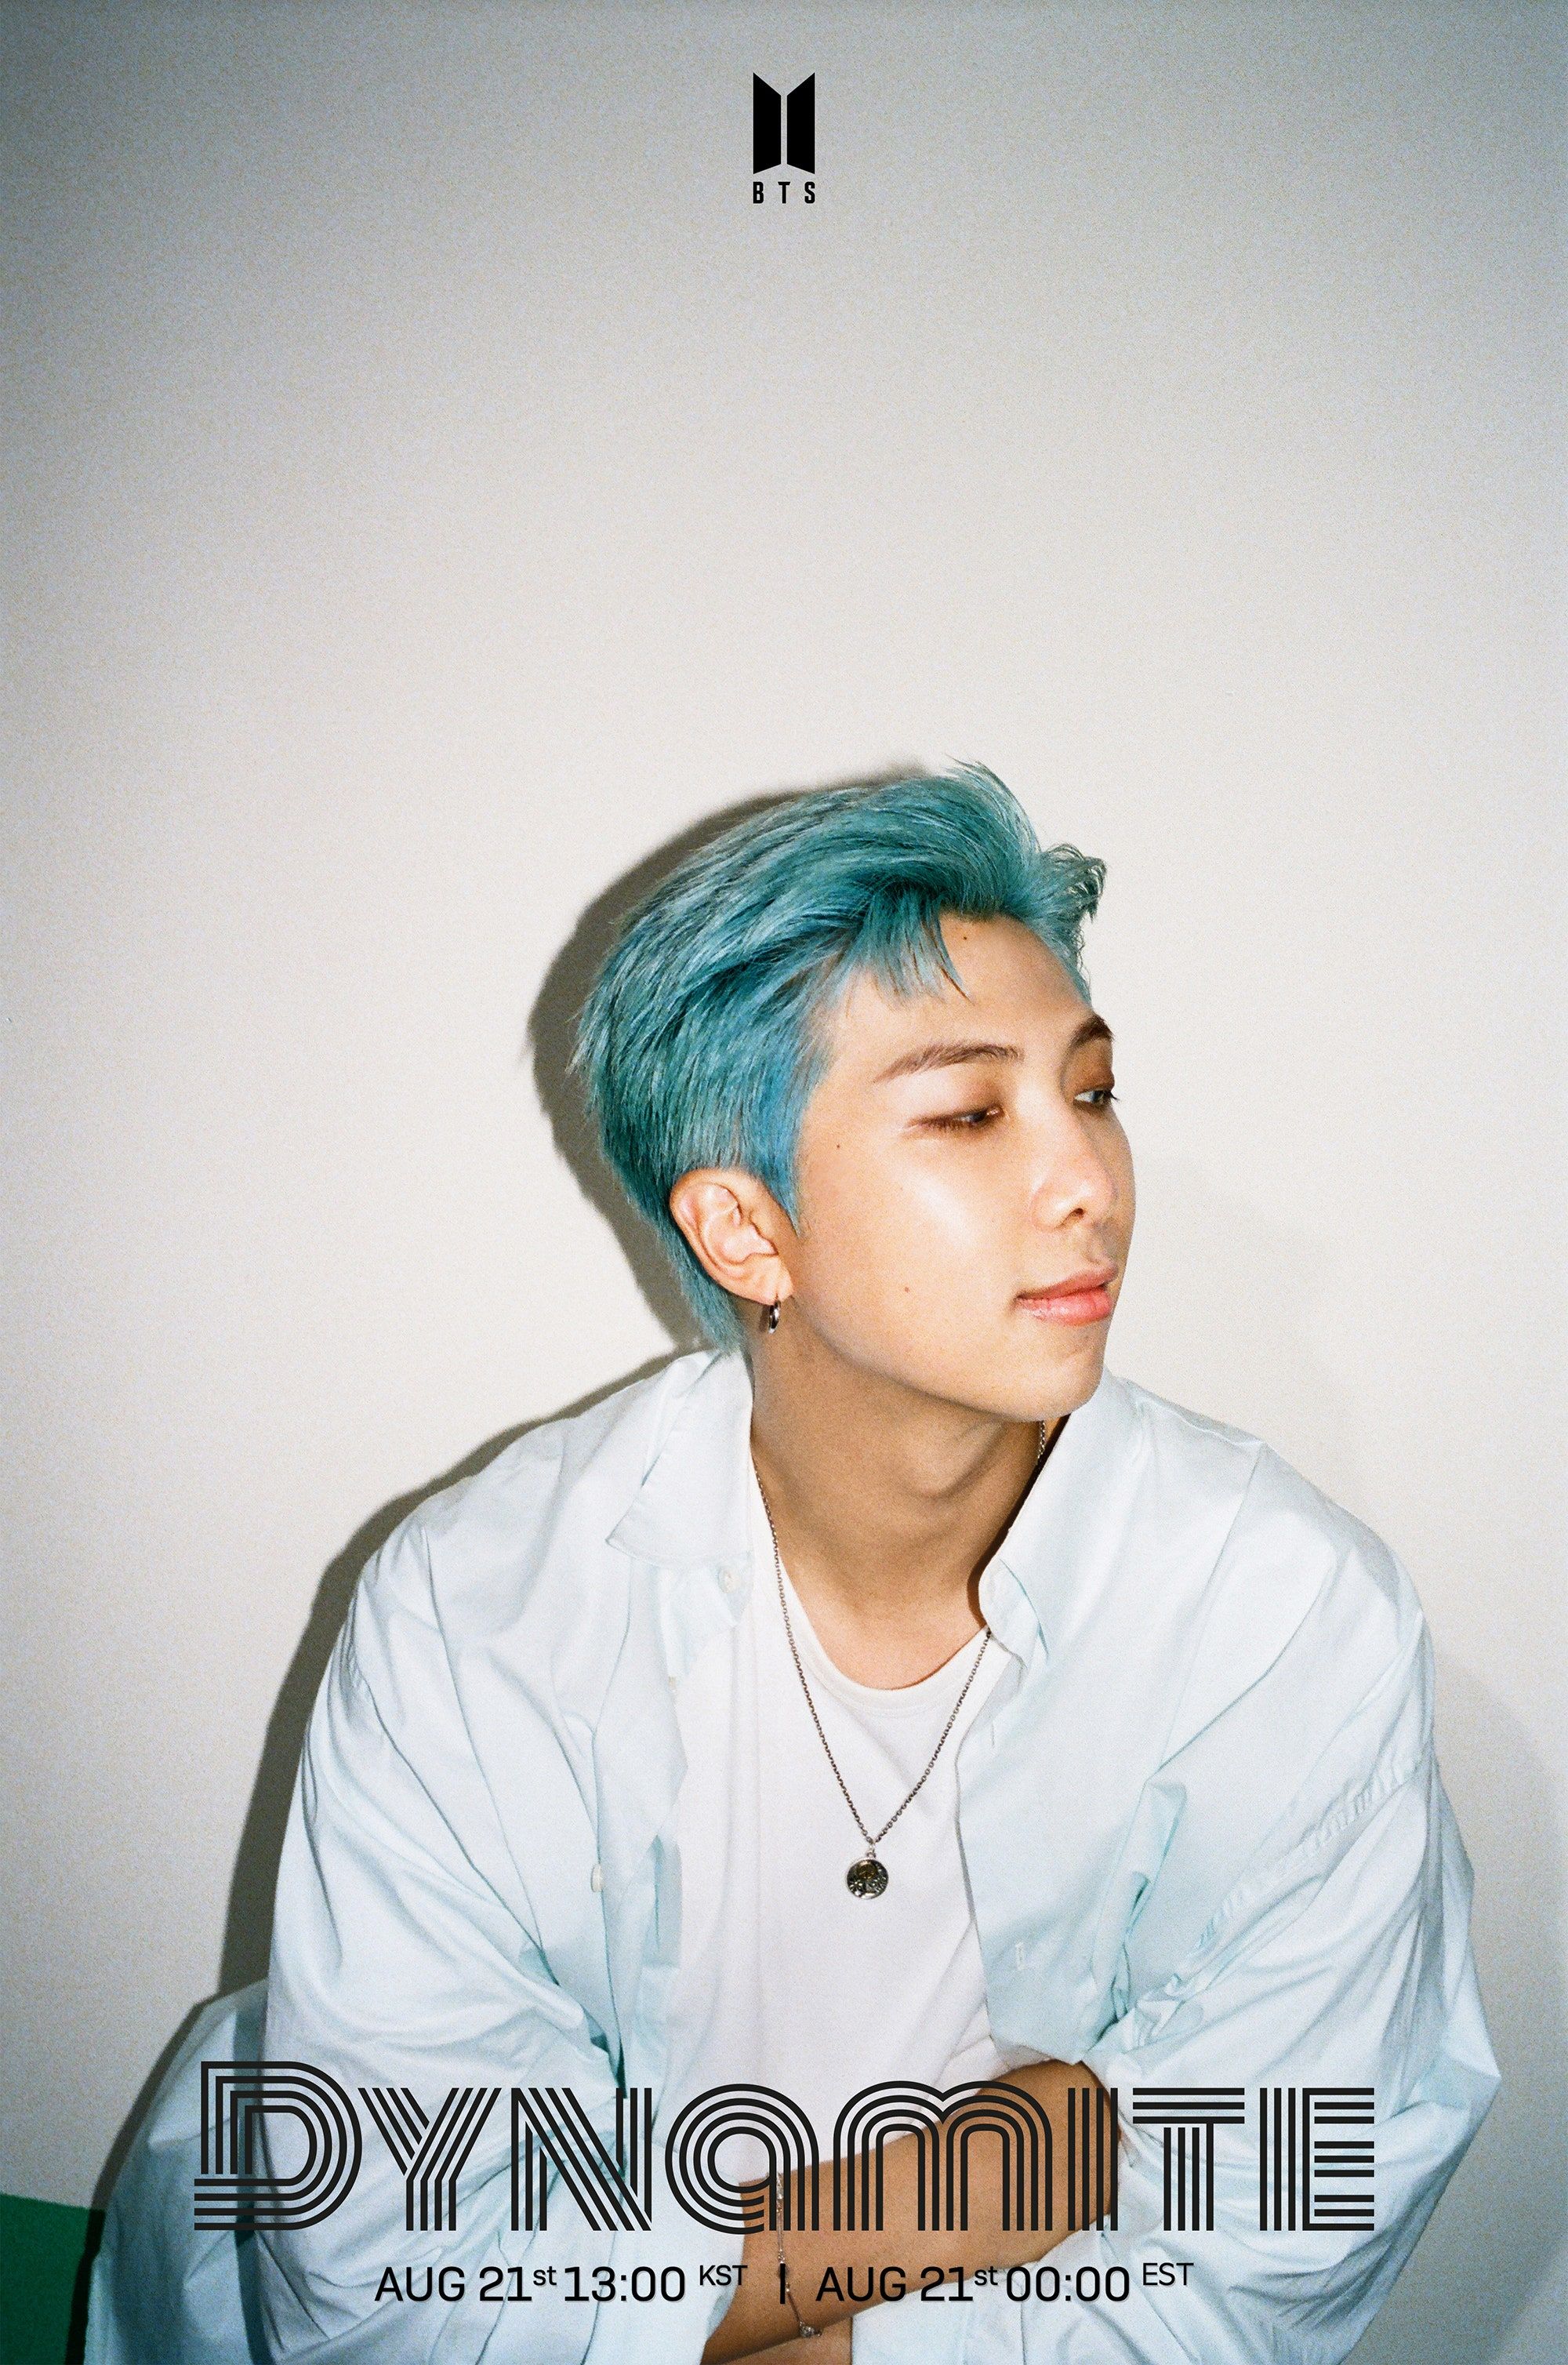 BTS “Dynamite” Teaser Photo Feature New Hair Colors, Retro